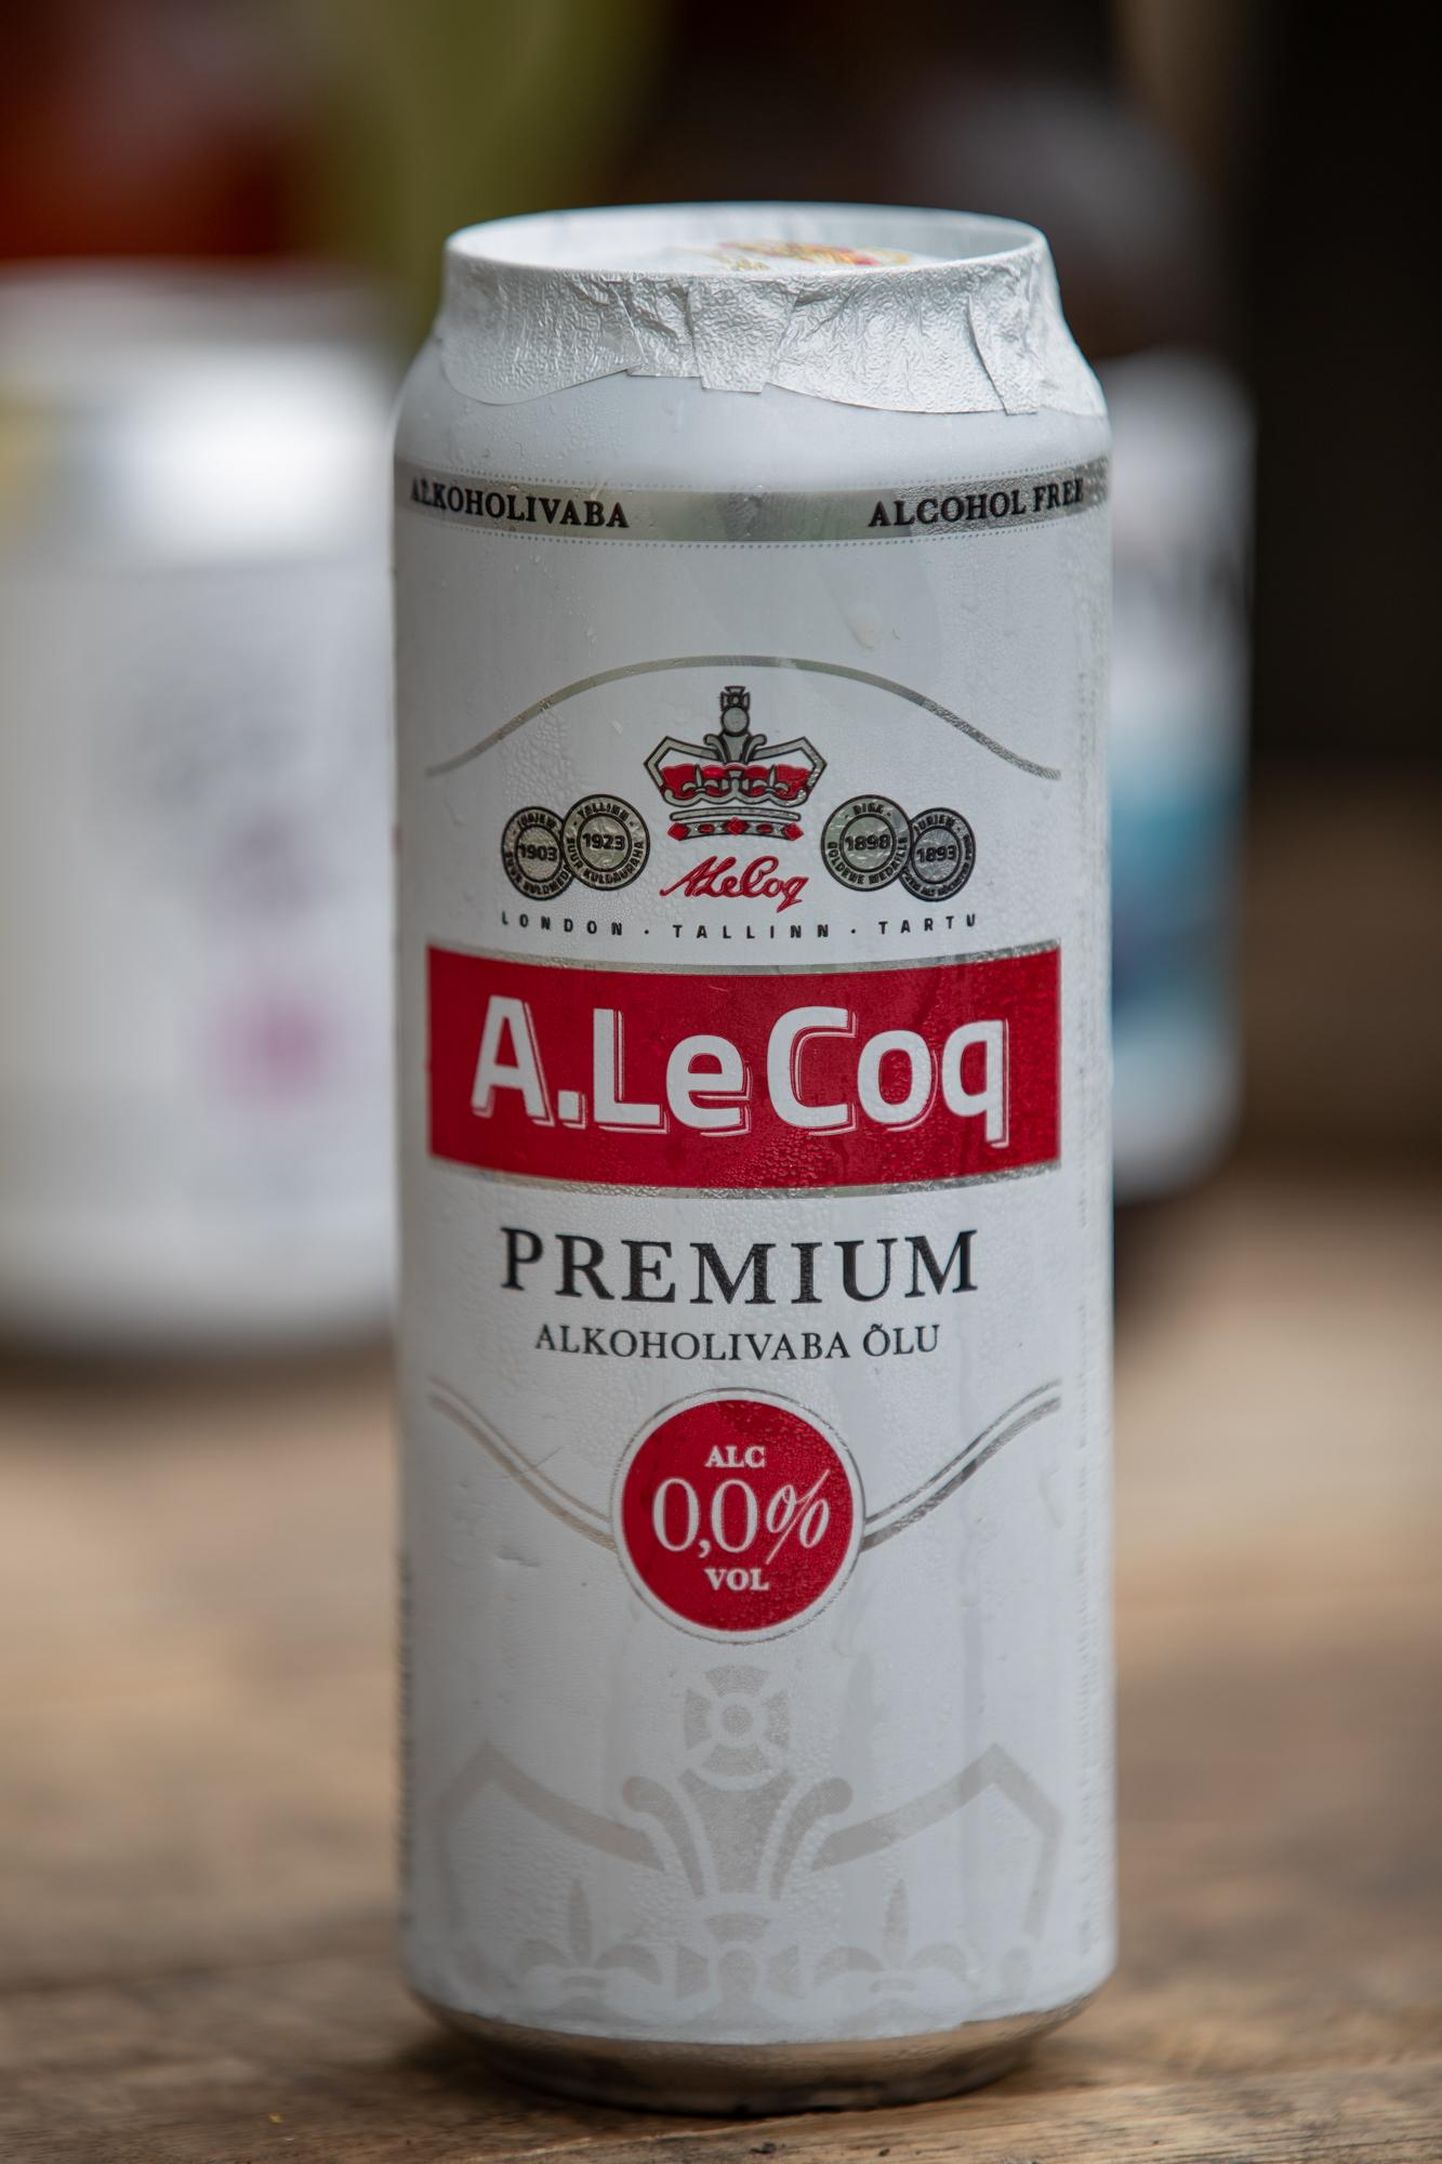 A. Le Coqi Premium alkoholivaba õlu. 0,0% vol. FOTO: Eero Vabamägi